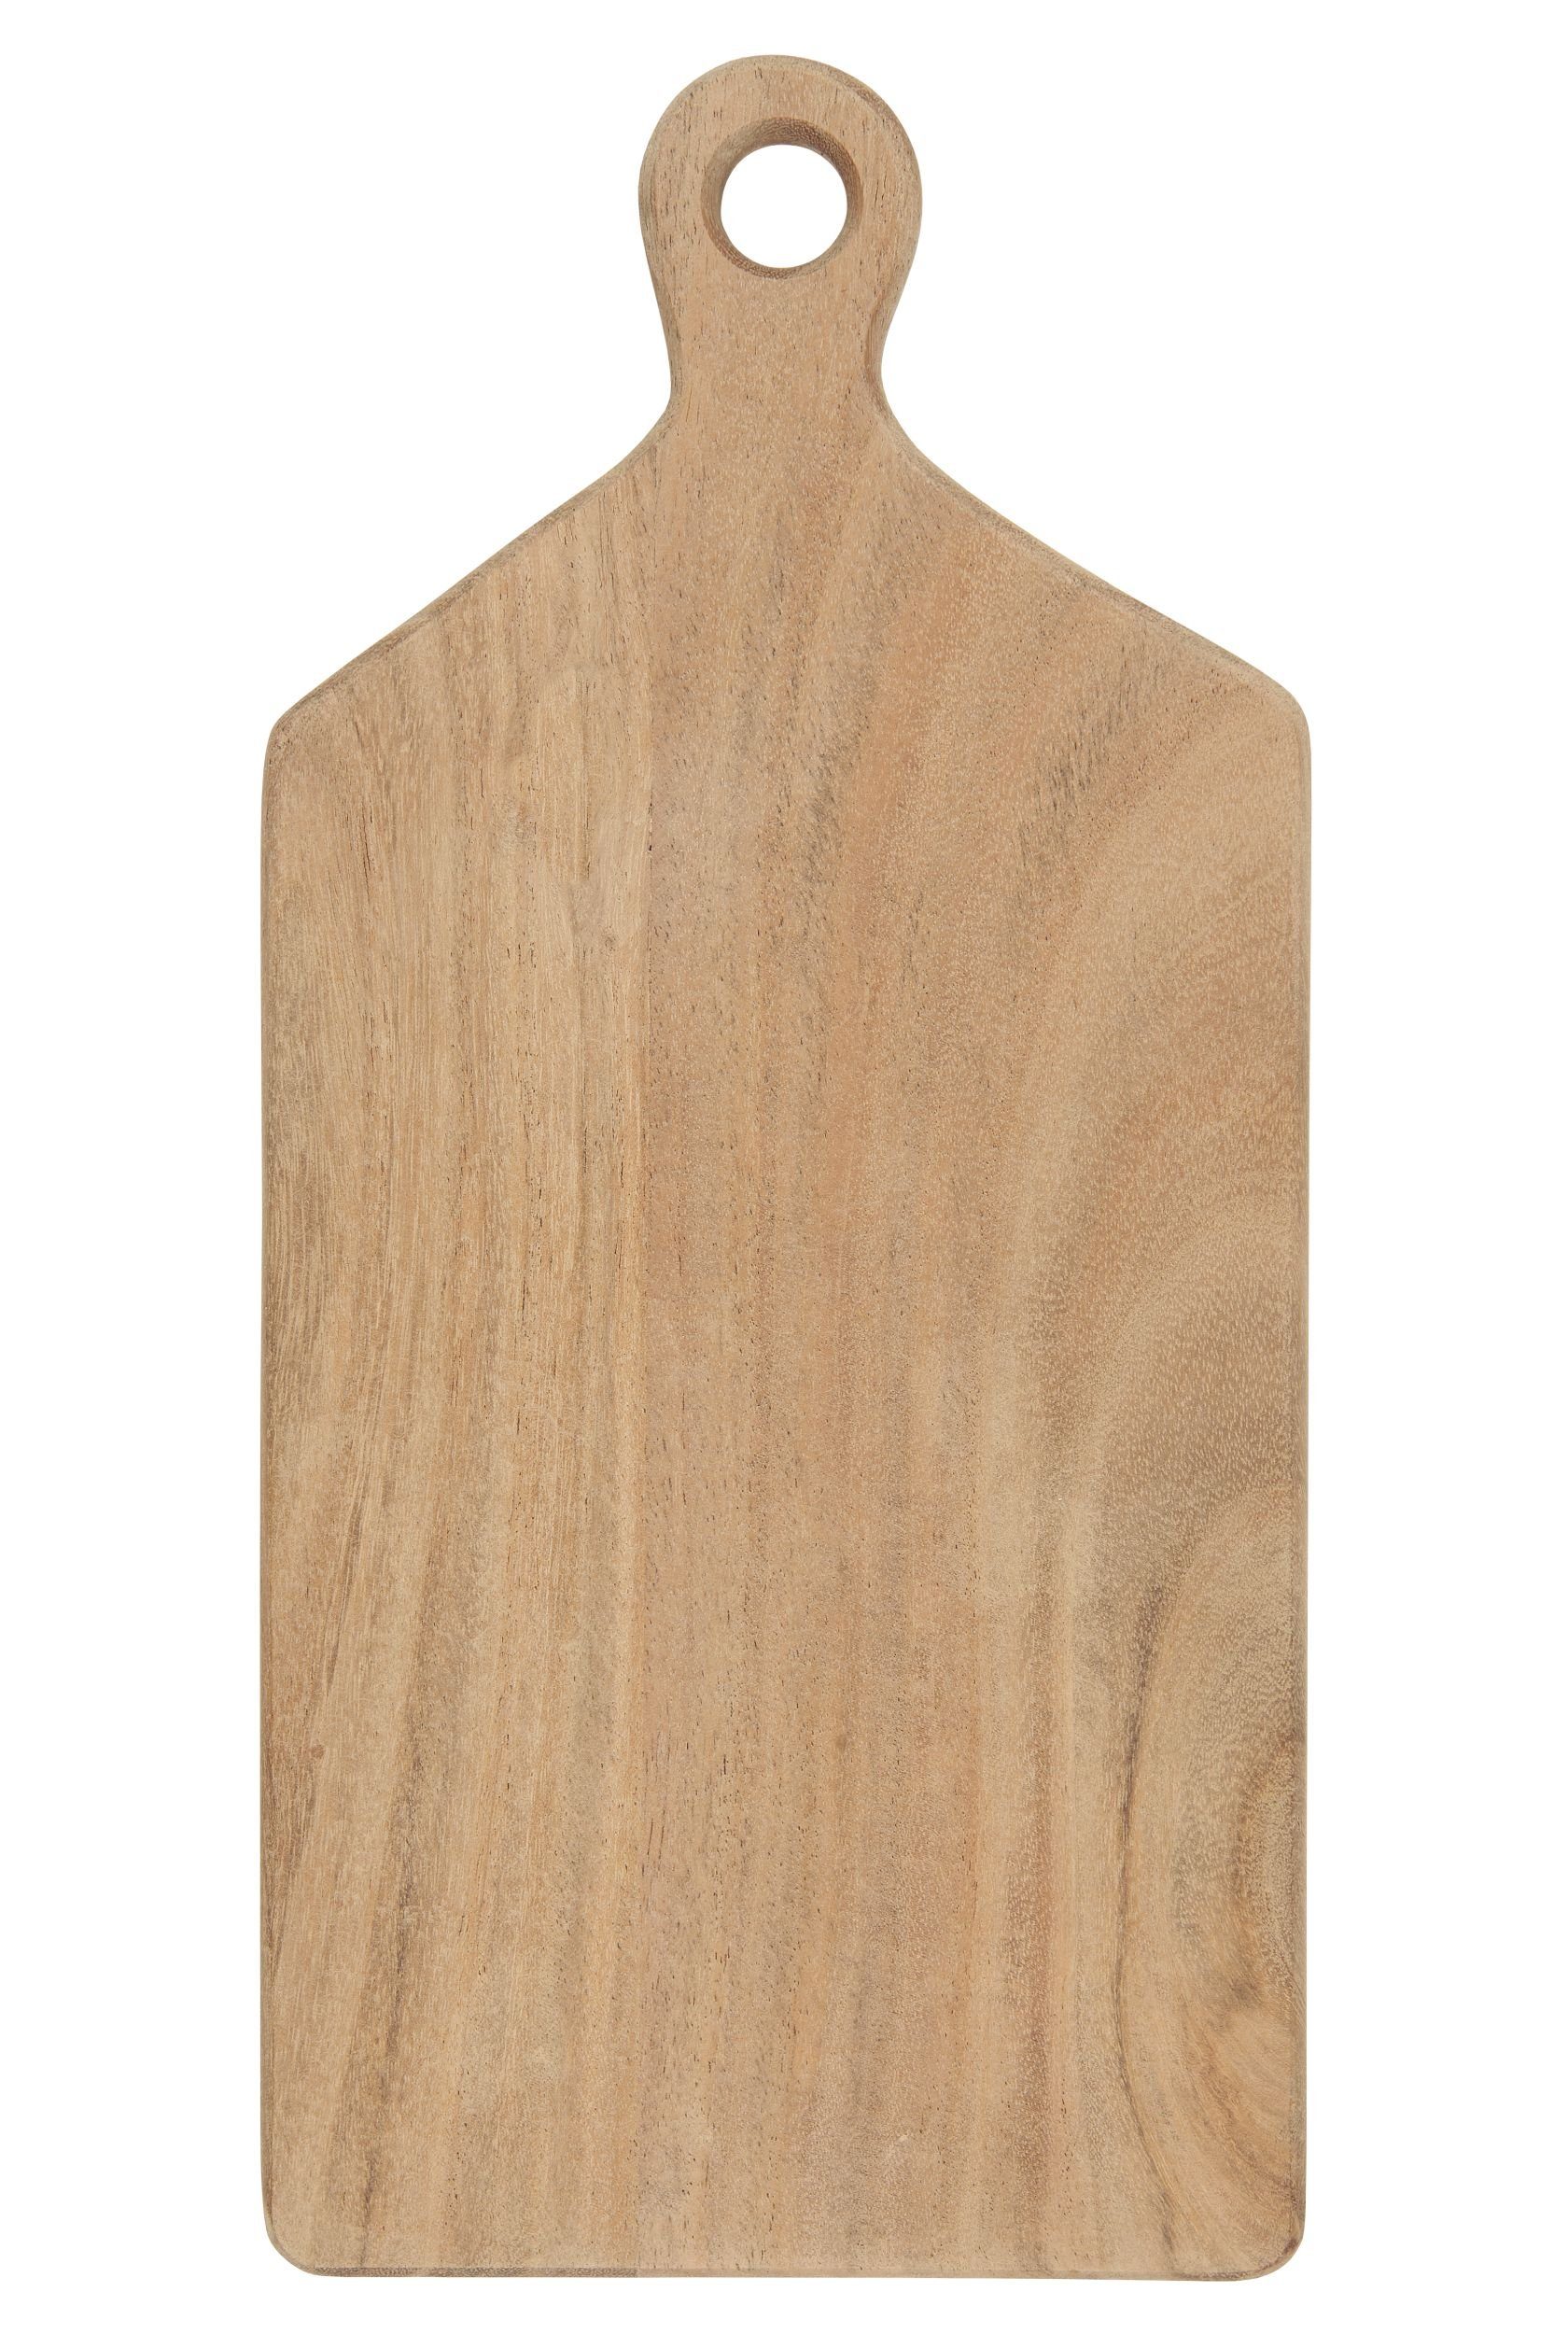 Ib Laursen Servierbrett Schneidebrett Servierbrett Brettchen Holz mit Griff 17x35cm Ib